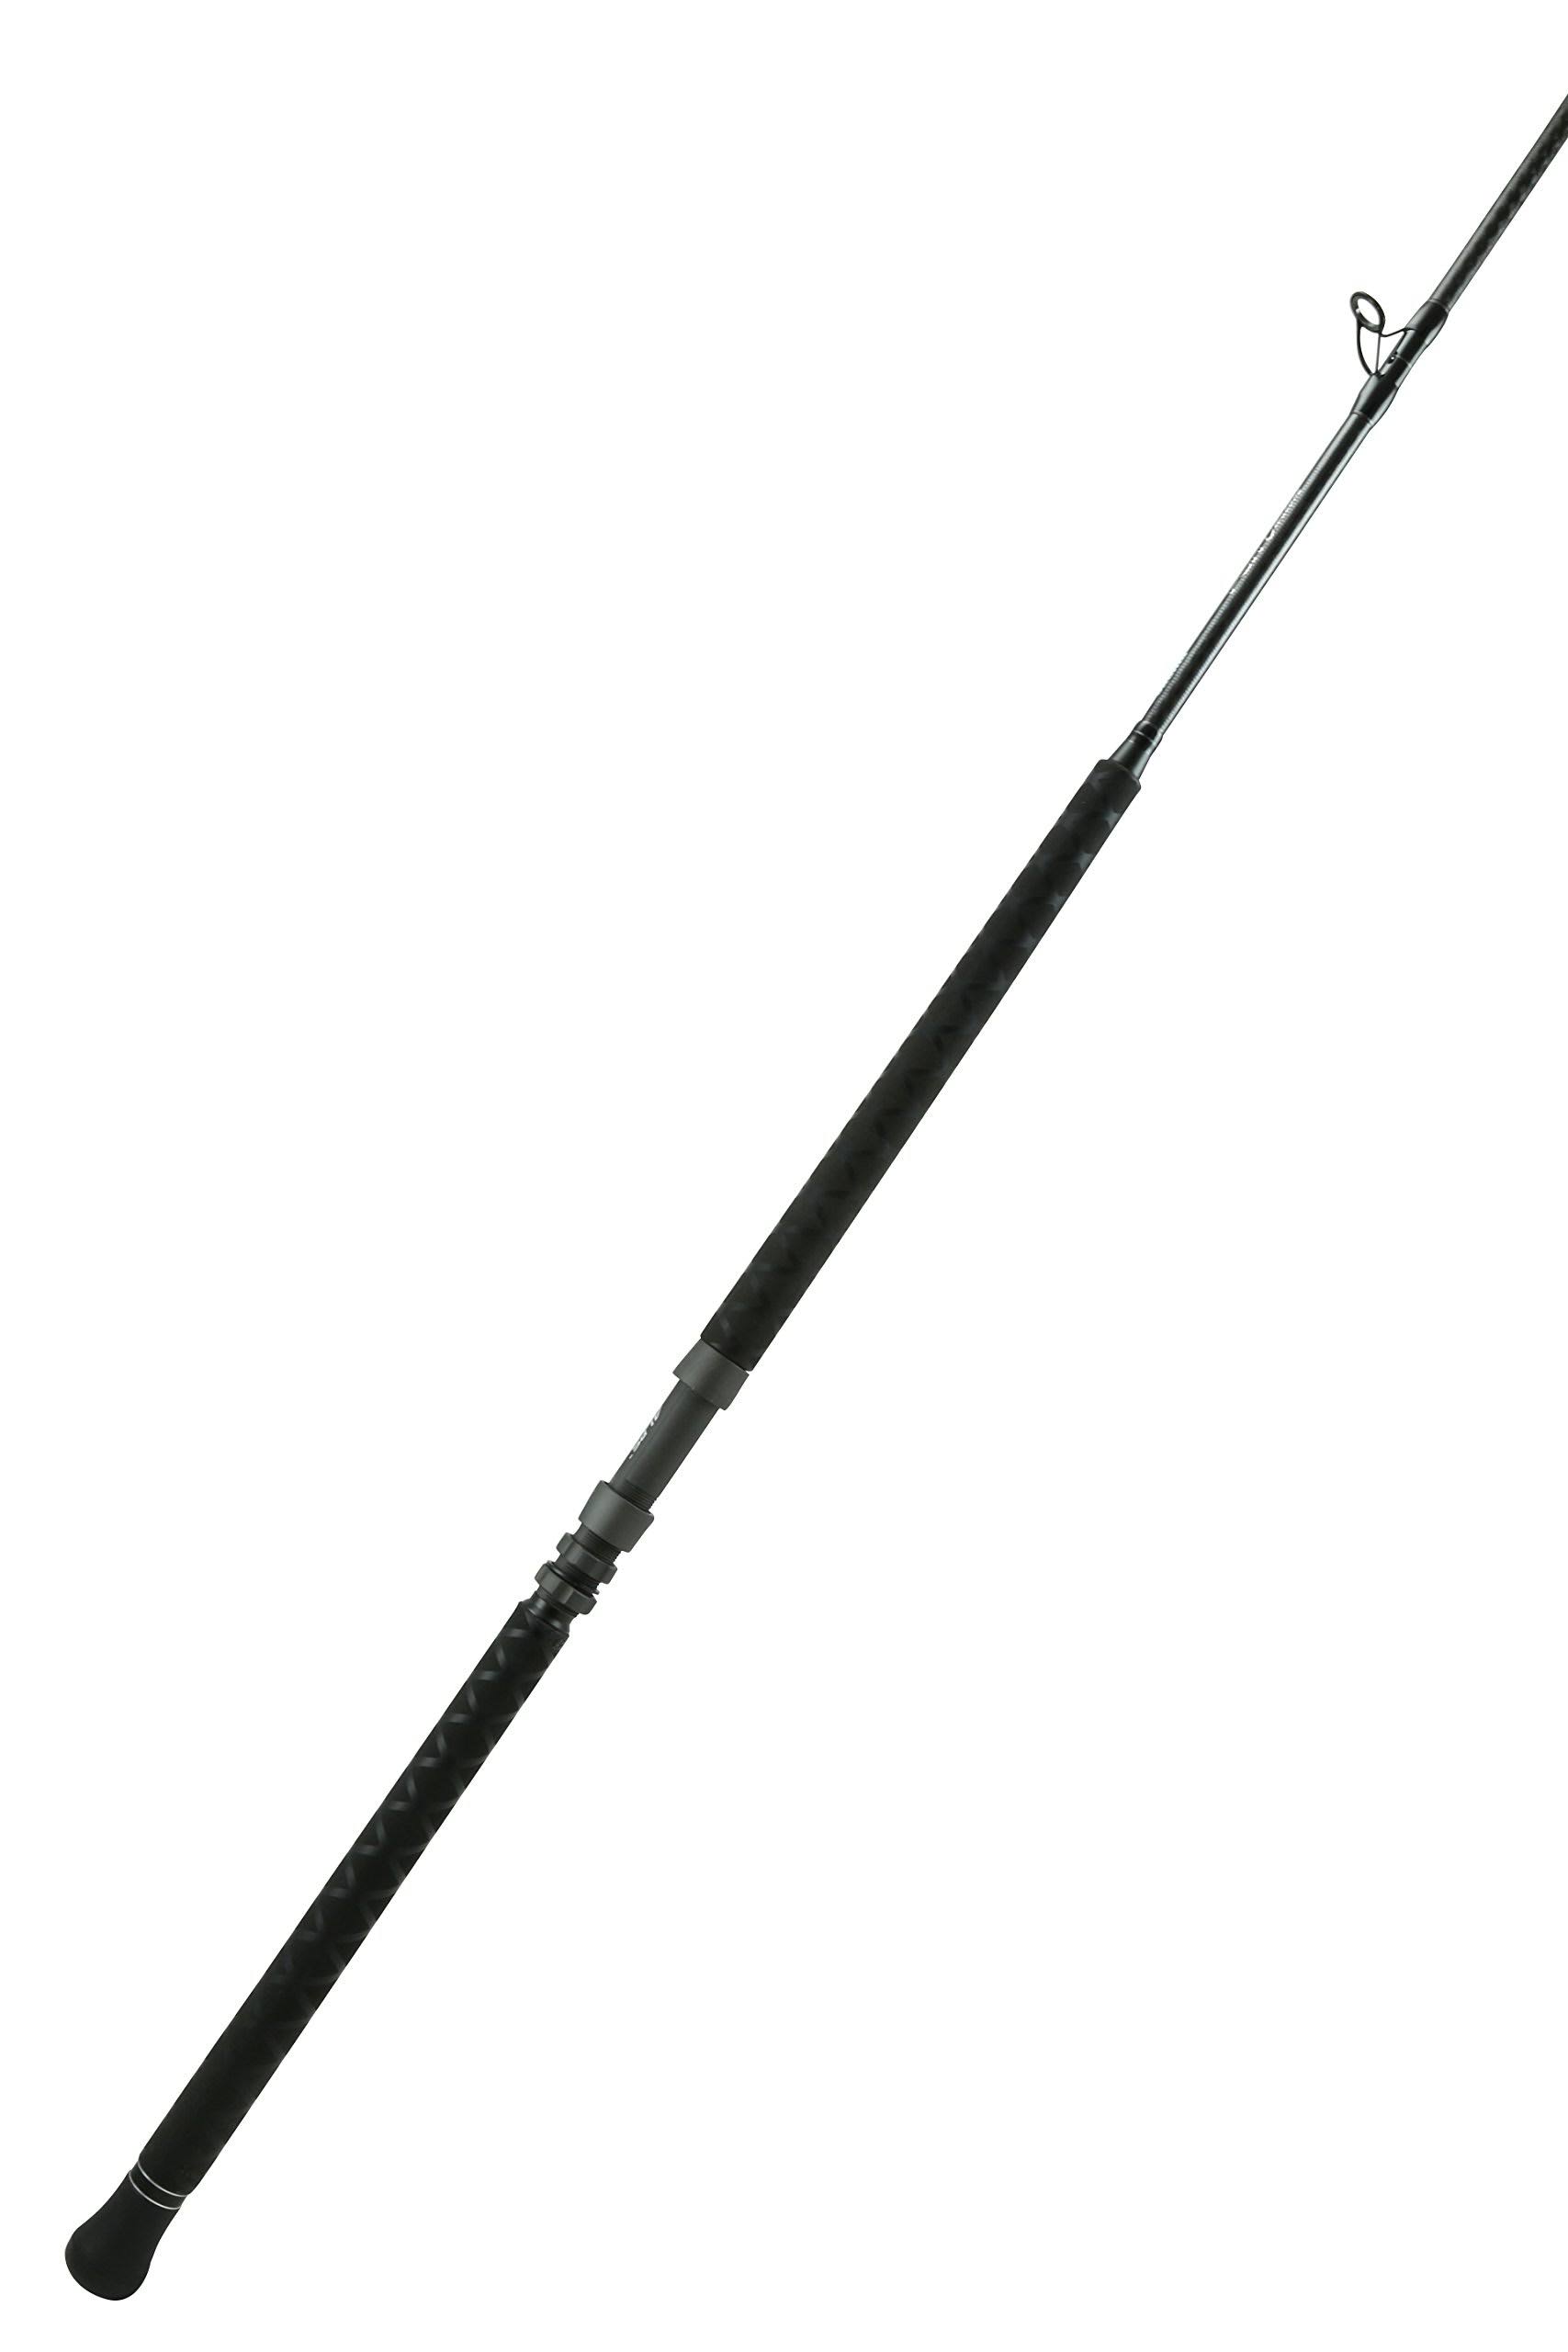 Okuma - PCH Custom Rod 8' 0" H 1-Pcs 20-50 lbs - PCH-C-801H